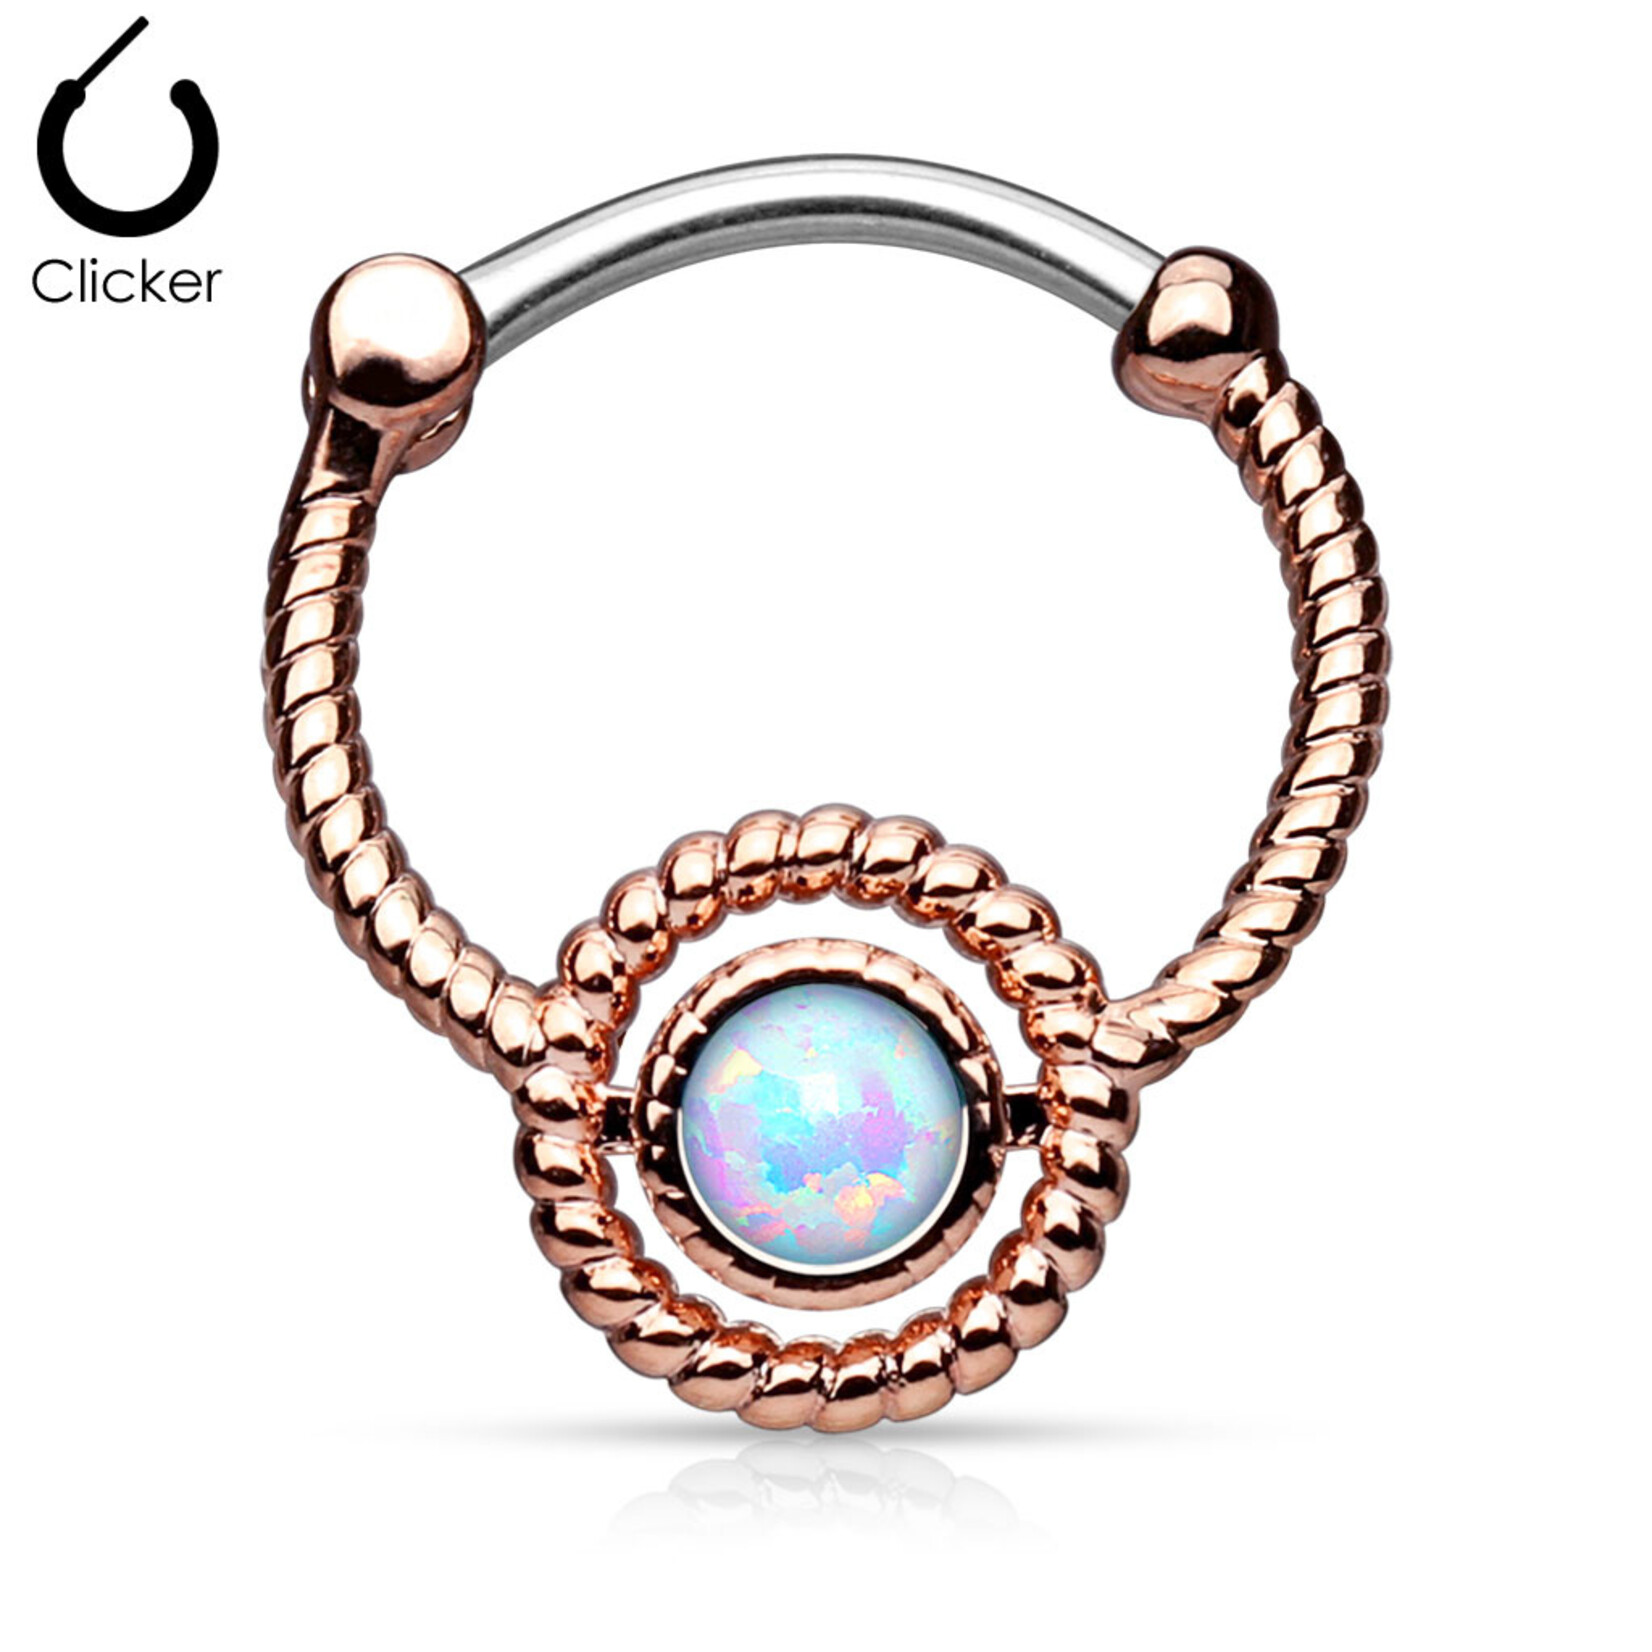 Body Jewelry Roped Opal Clicker